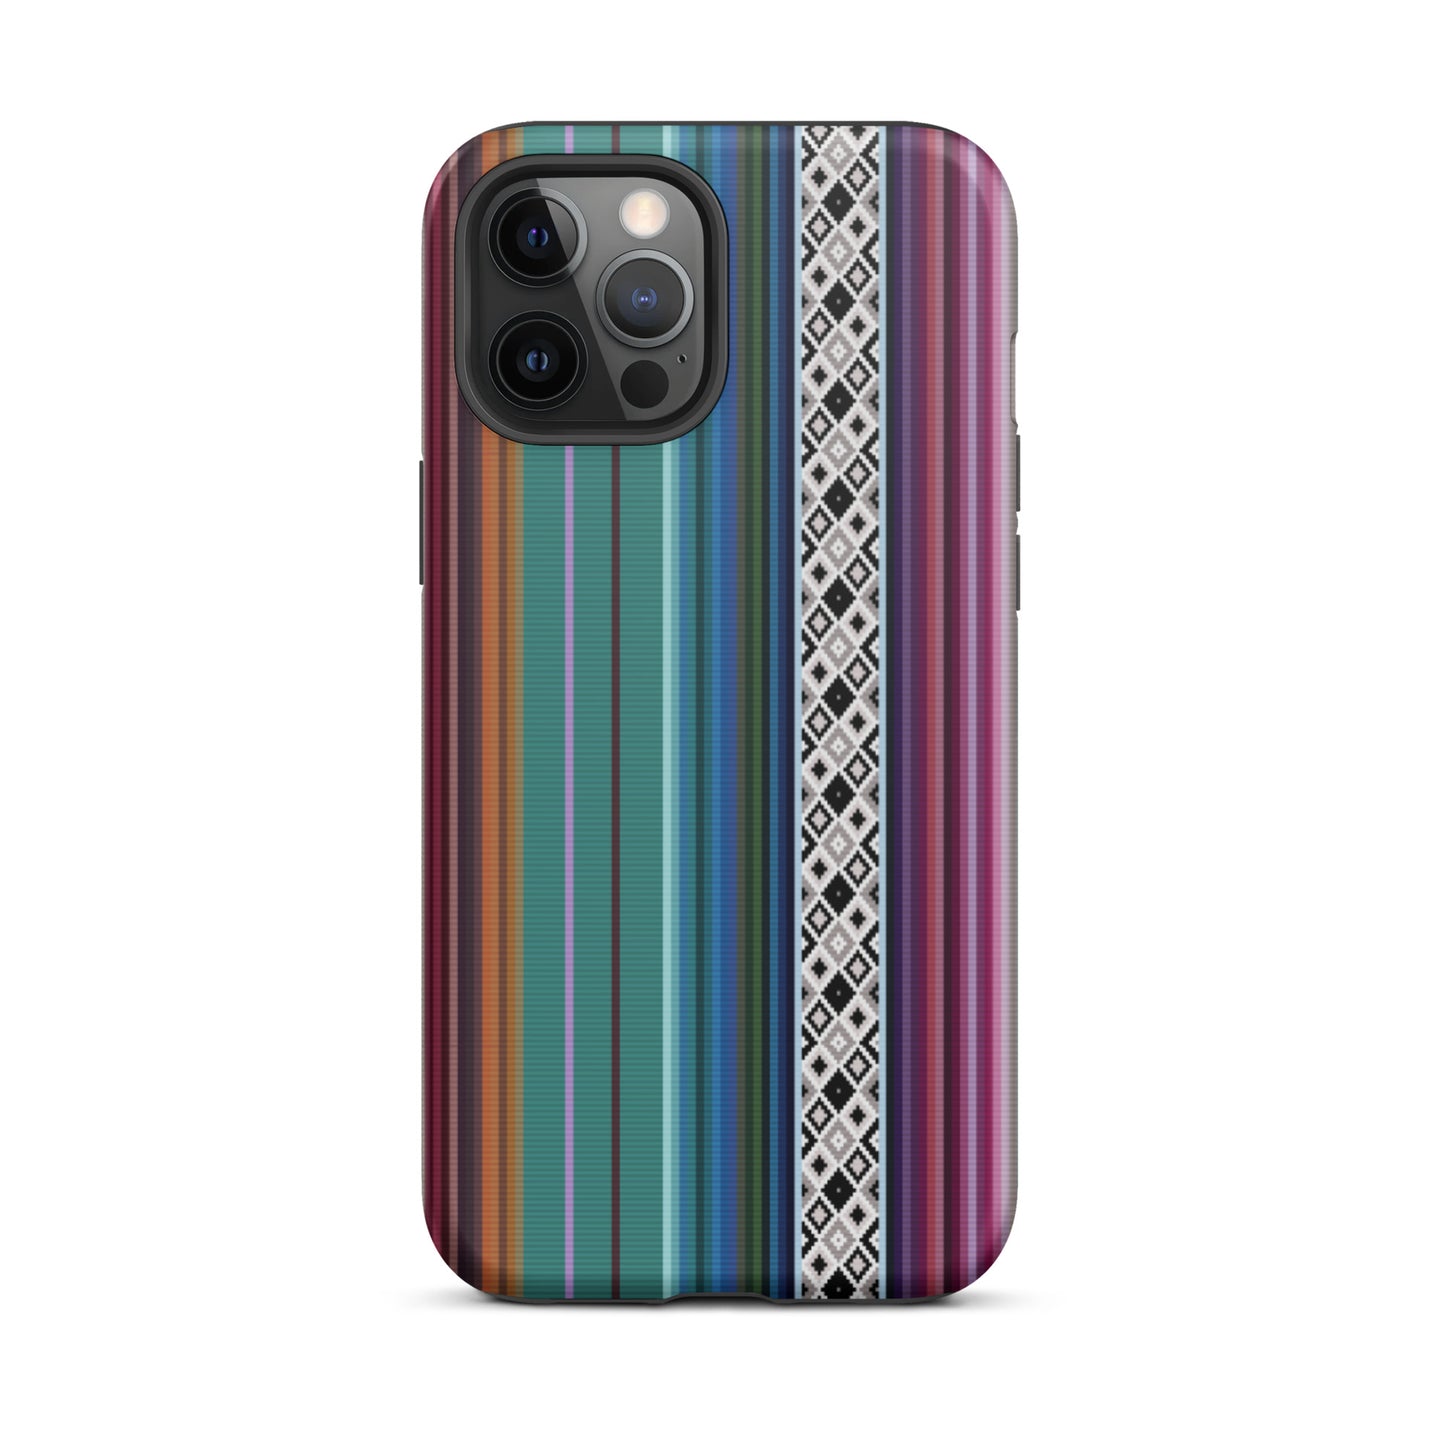 Mexican Aztec Tough iPhone 12 Pro Max case